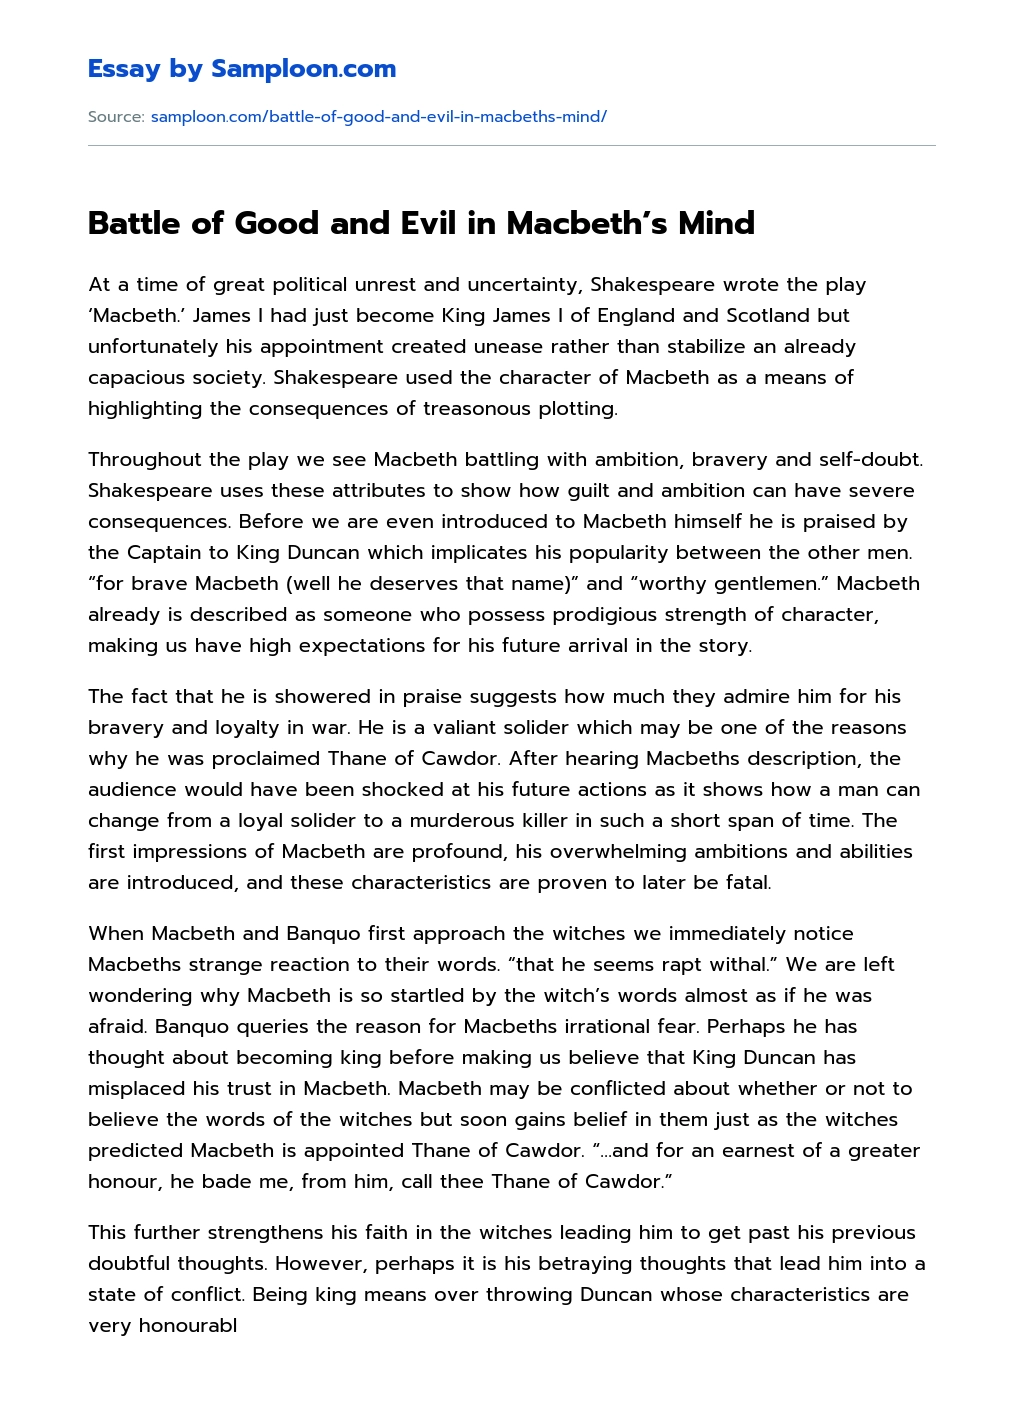 good vs evil macbeth essay